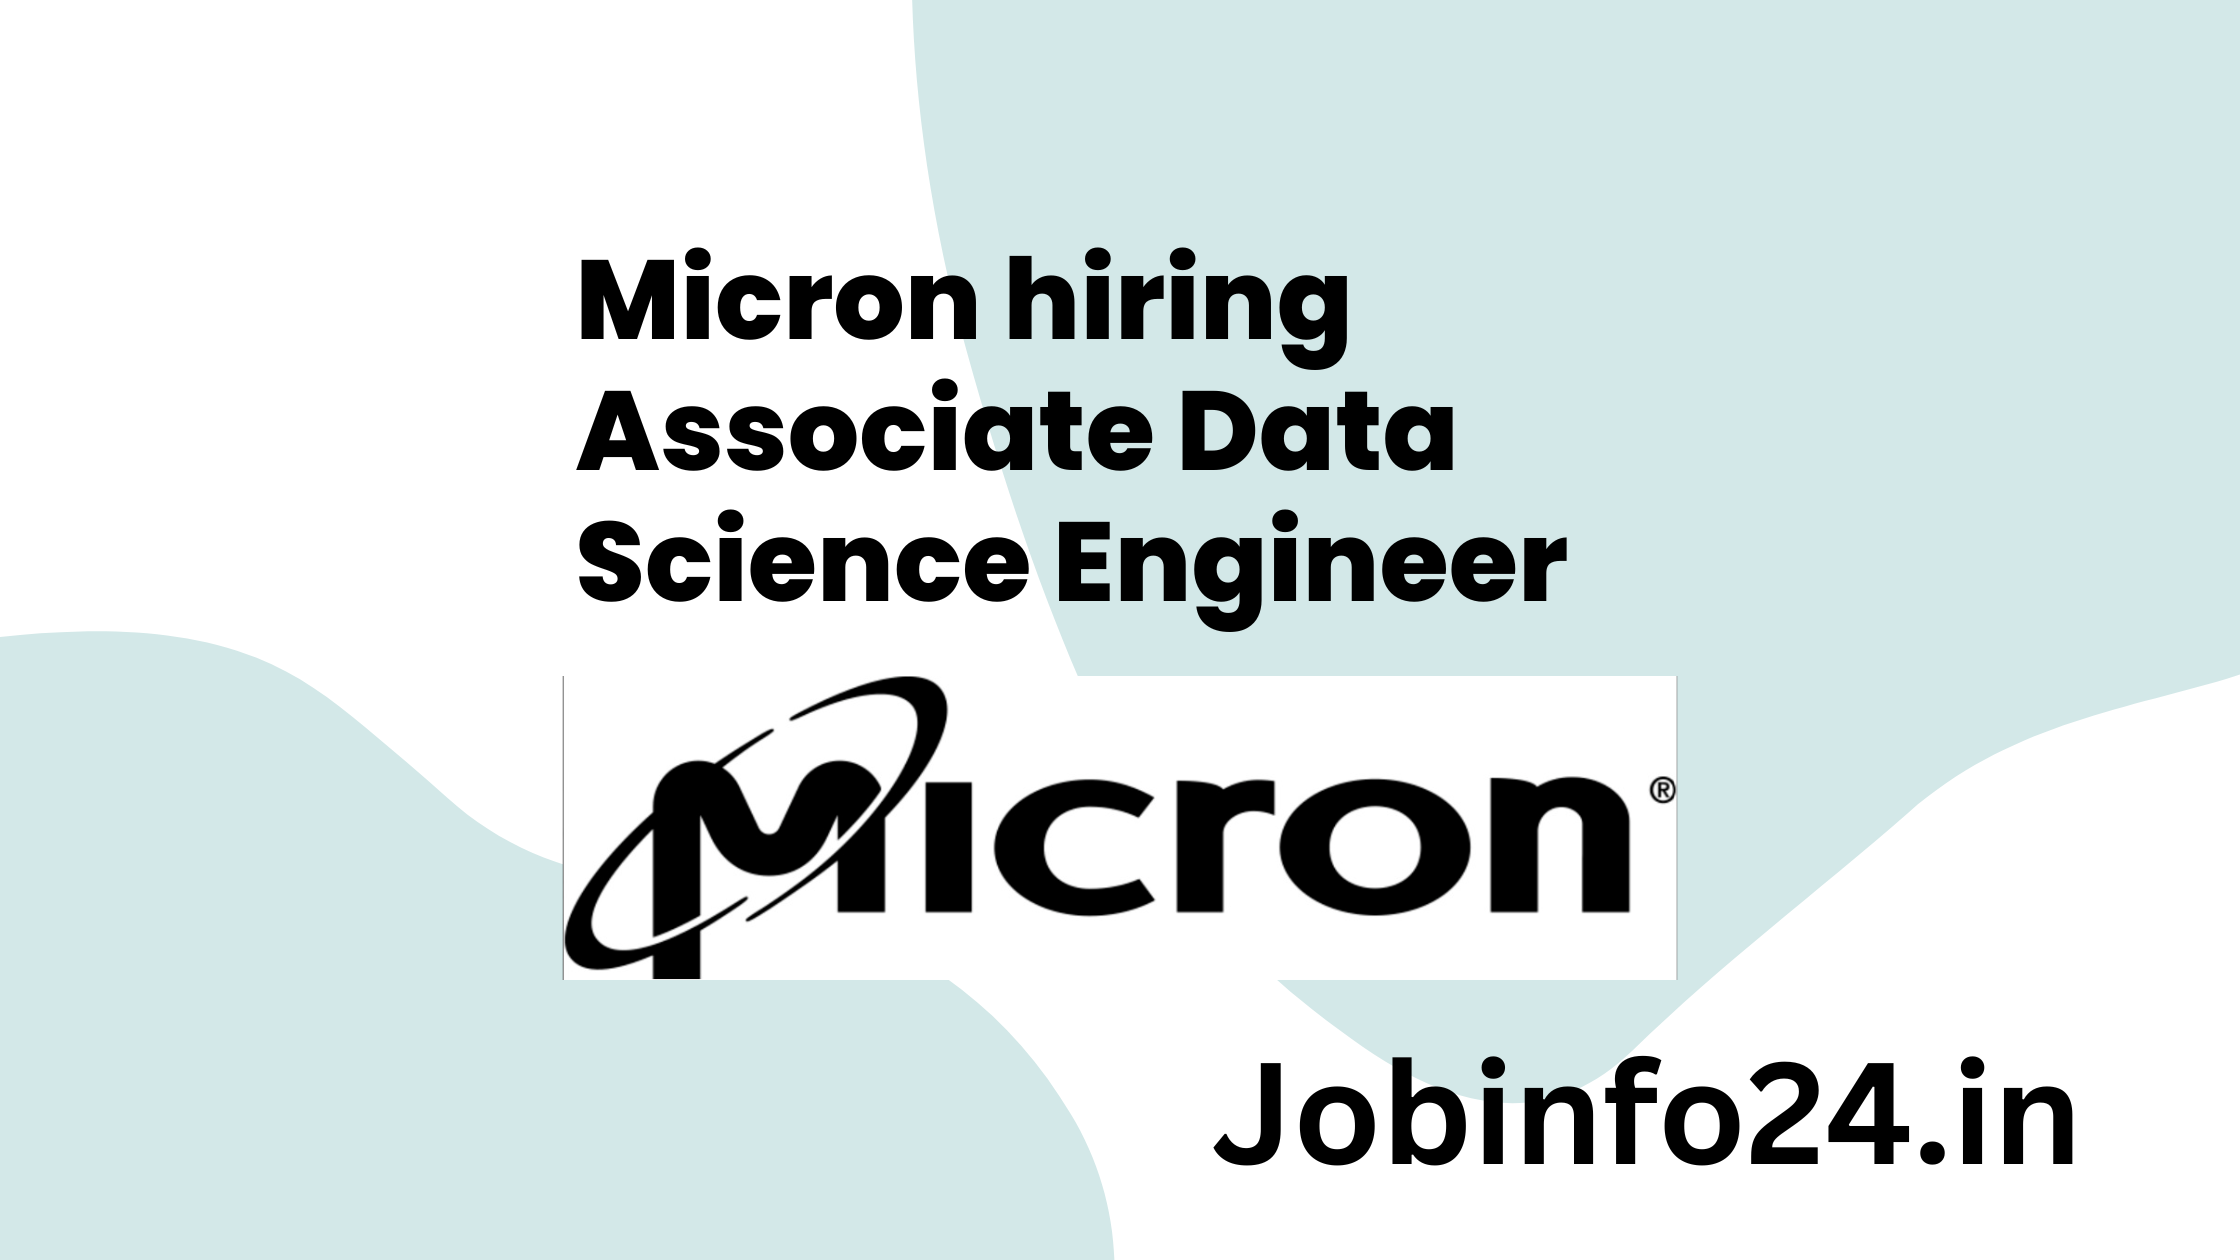 Micron hiring Associate Data Science Engineer 